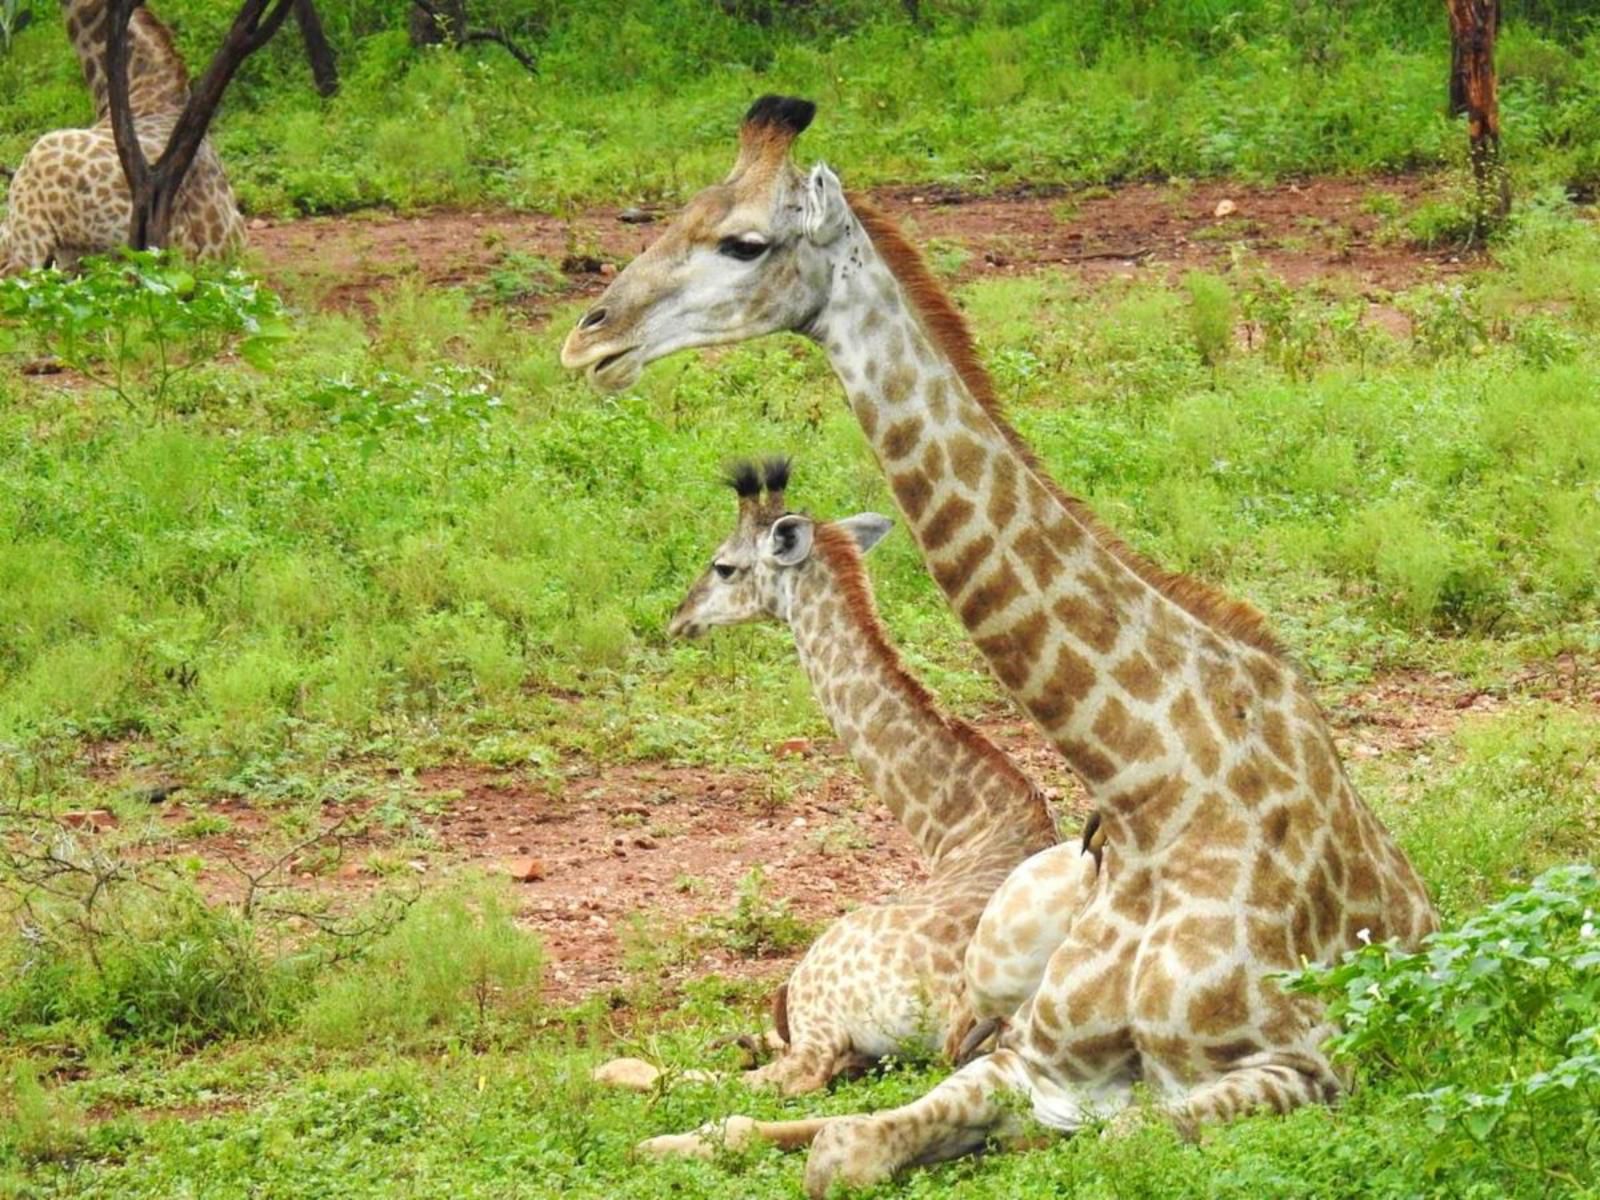 Doornkom Marloth Park Mpumalanga South Africa Giraffe, Mammal, Animal, Herbivore